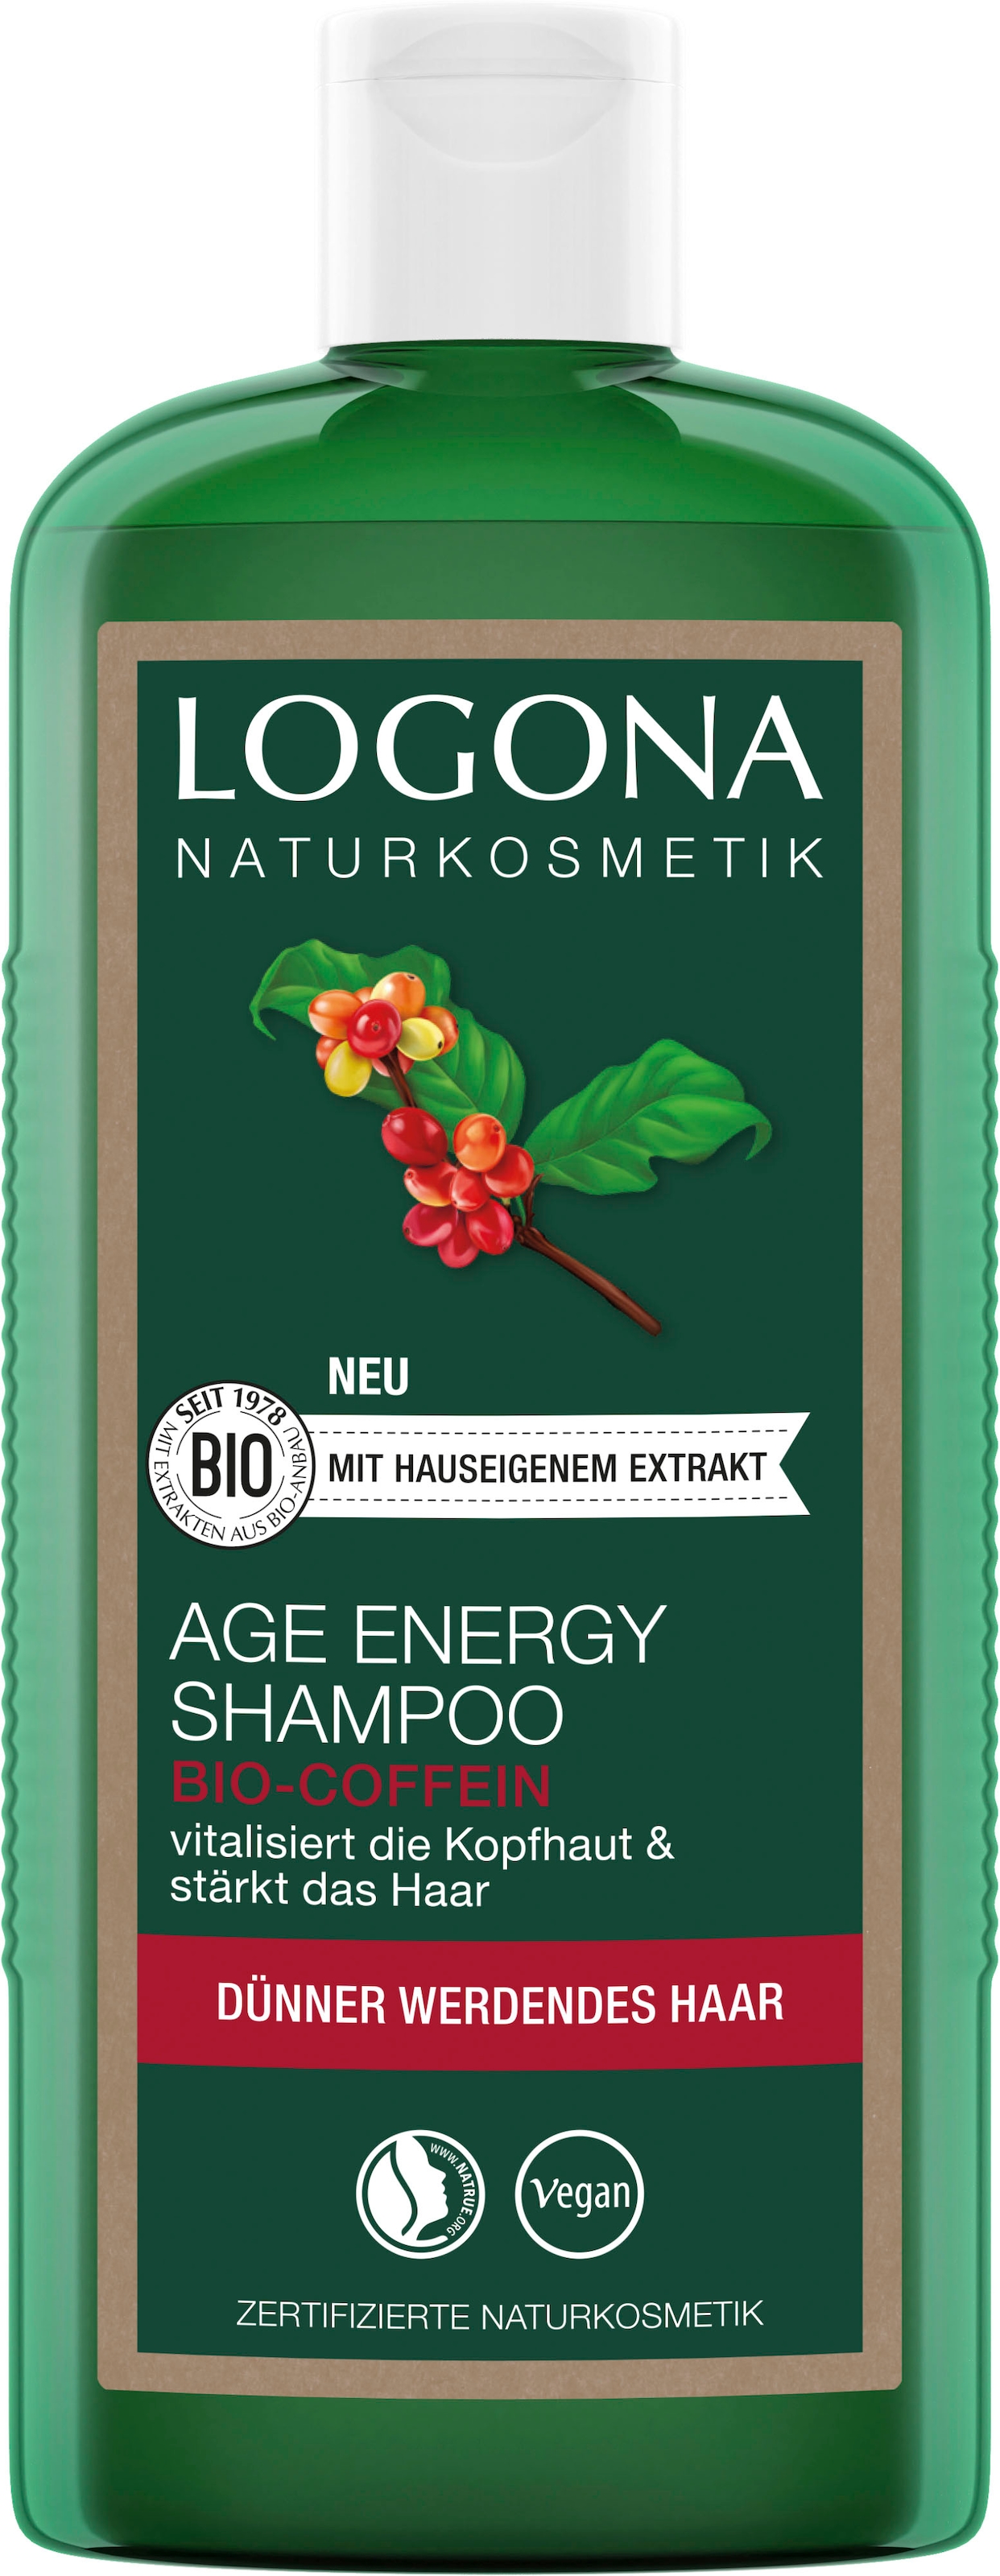 Bio-Coffein« Energy Shampoo bei LOGONA Age »Logona OTTOversand Haarshampoo